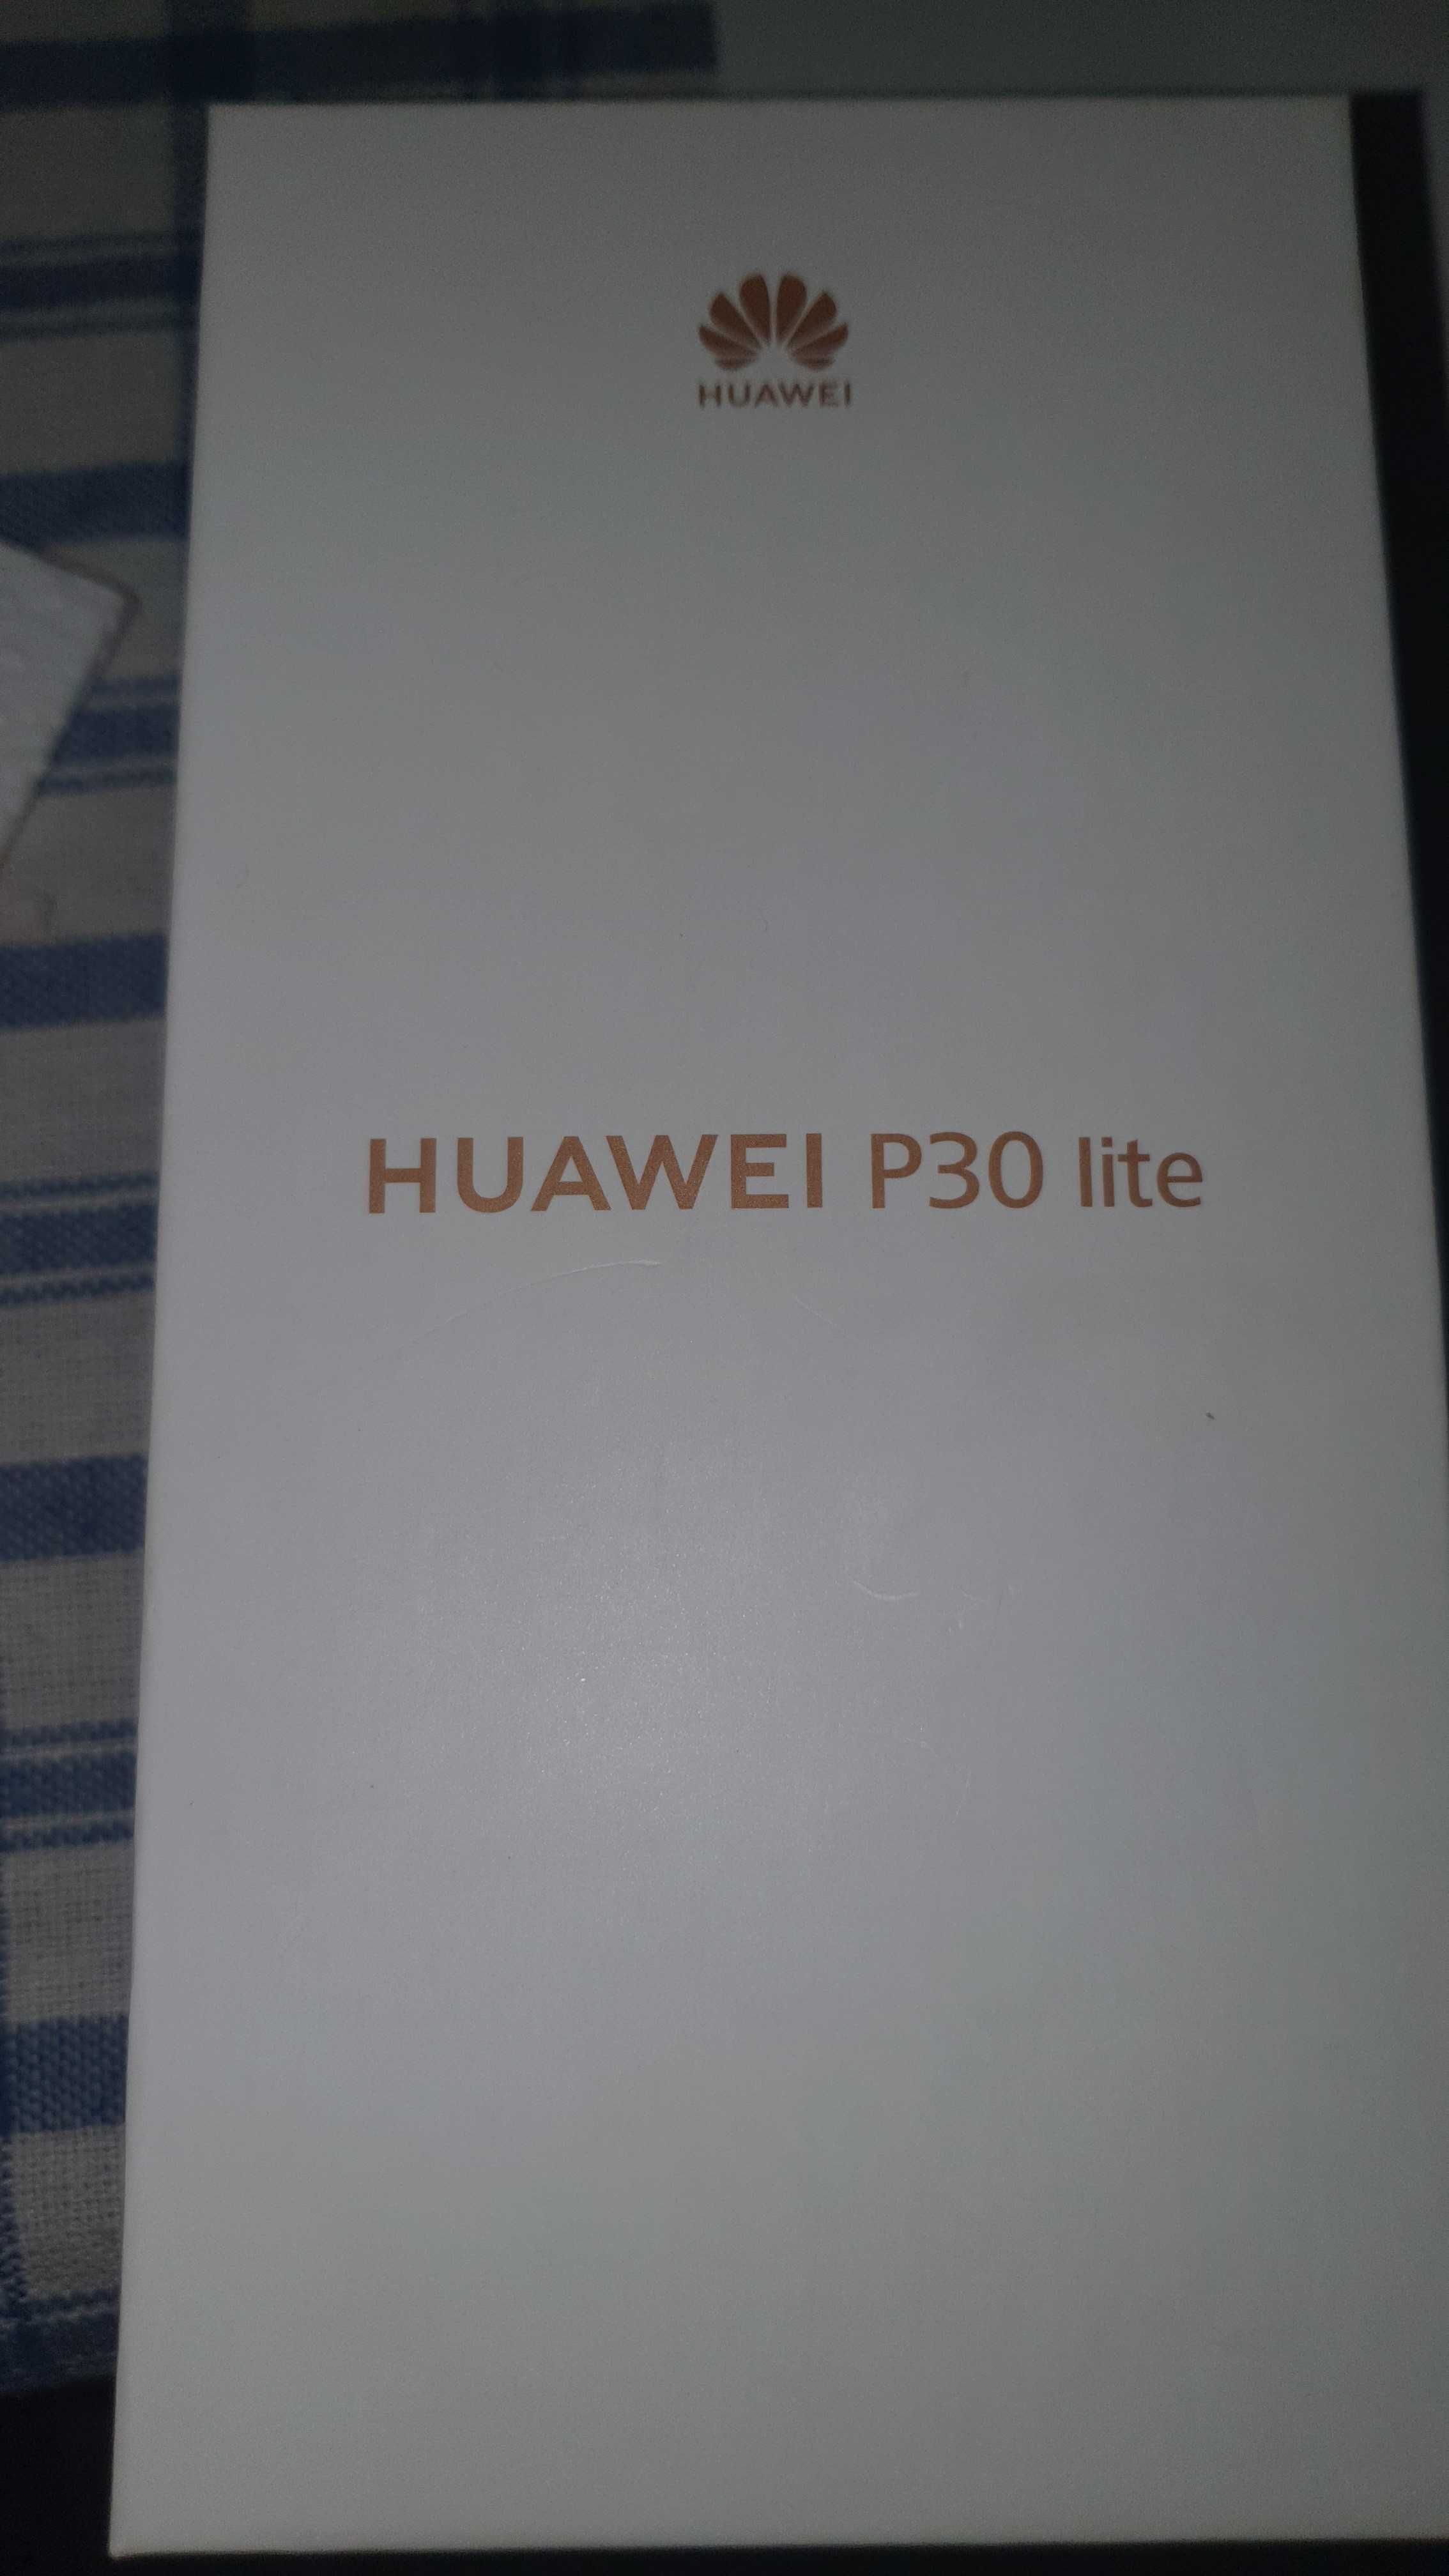 Huawei P 30 lite